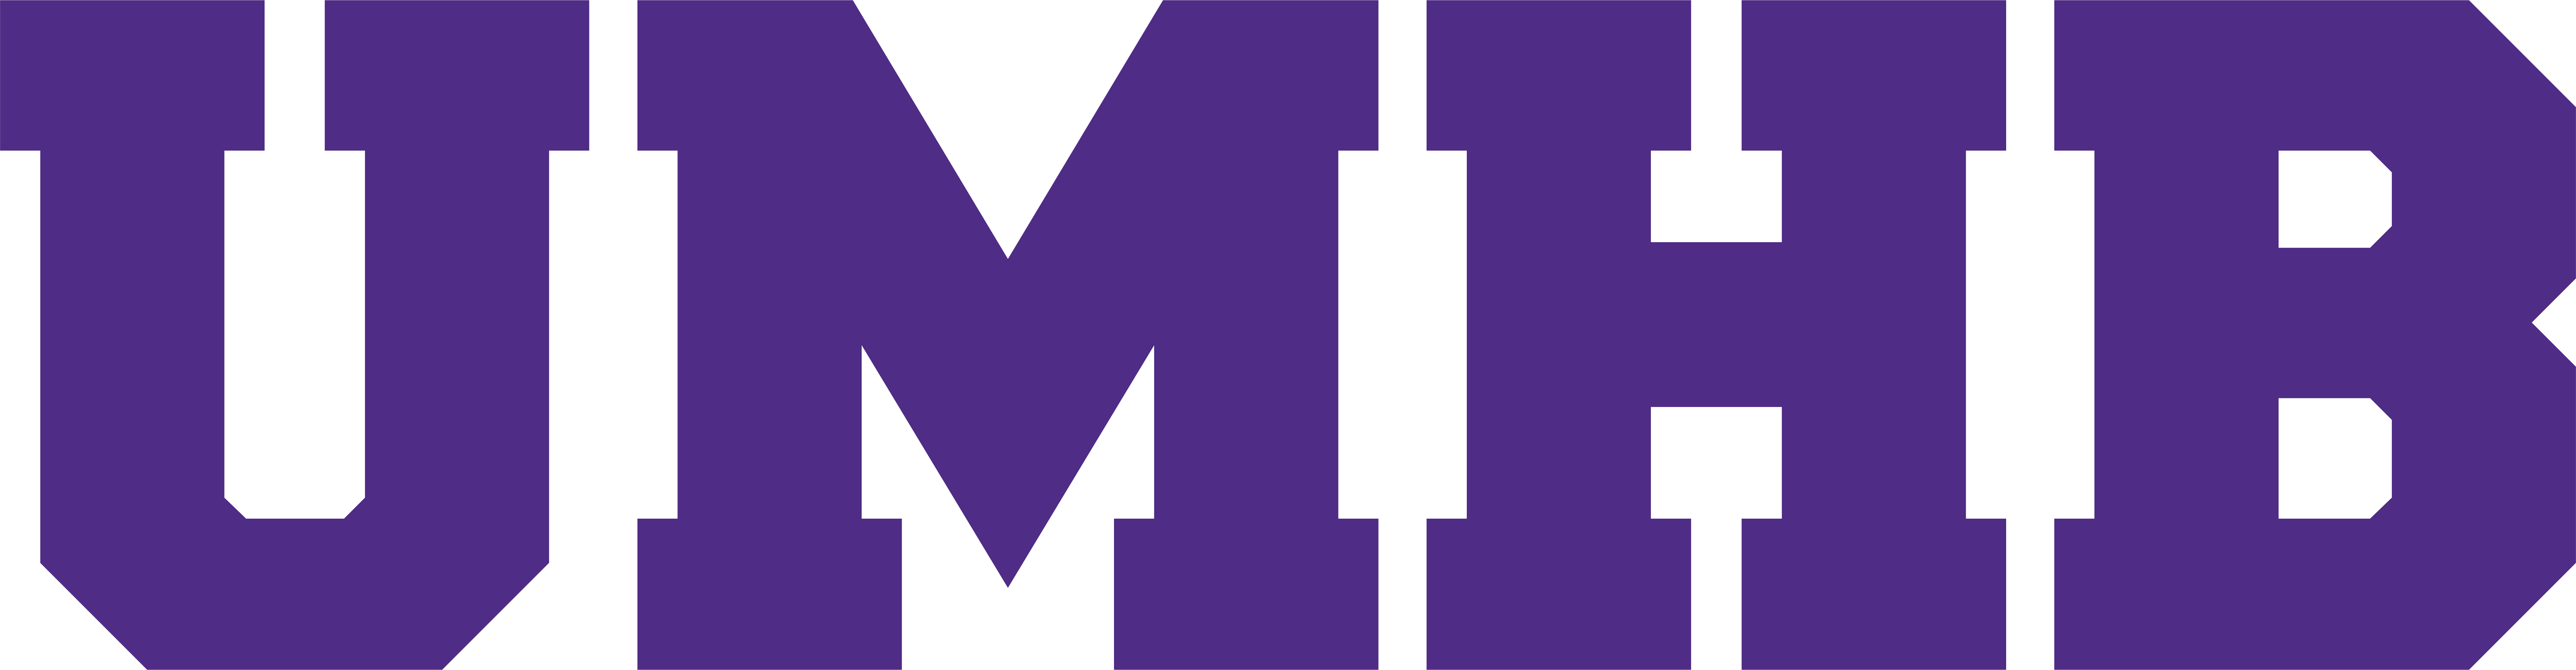 Secondary UMHB logo - color purple